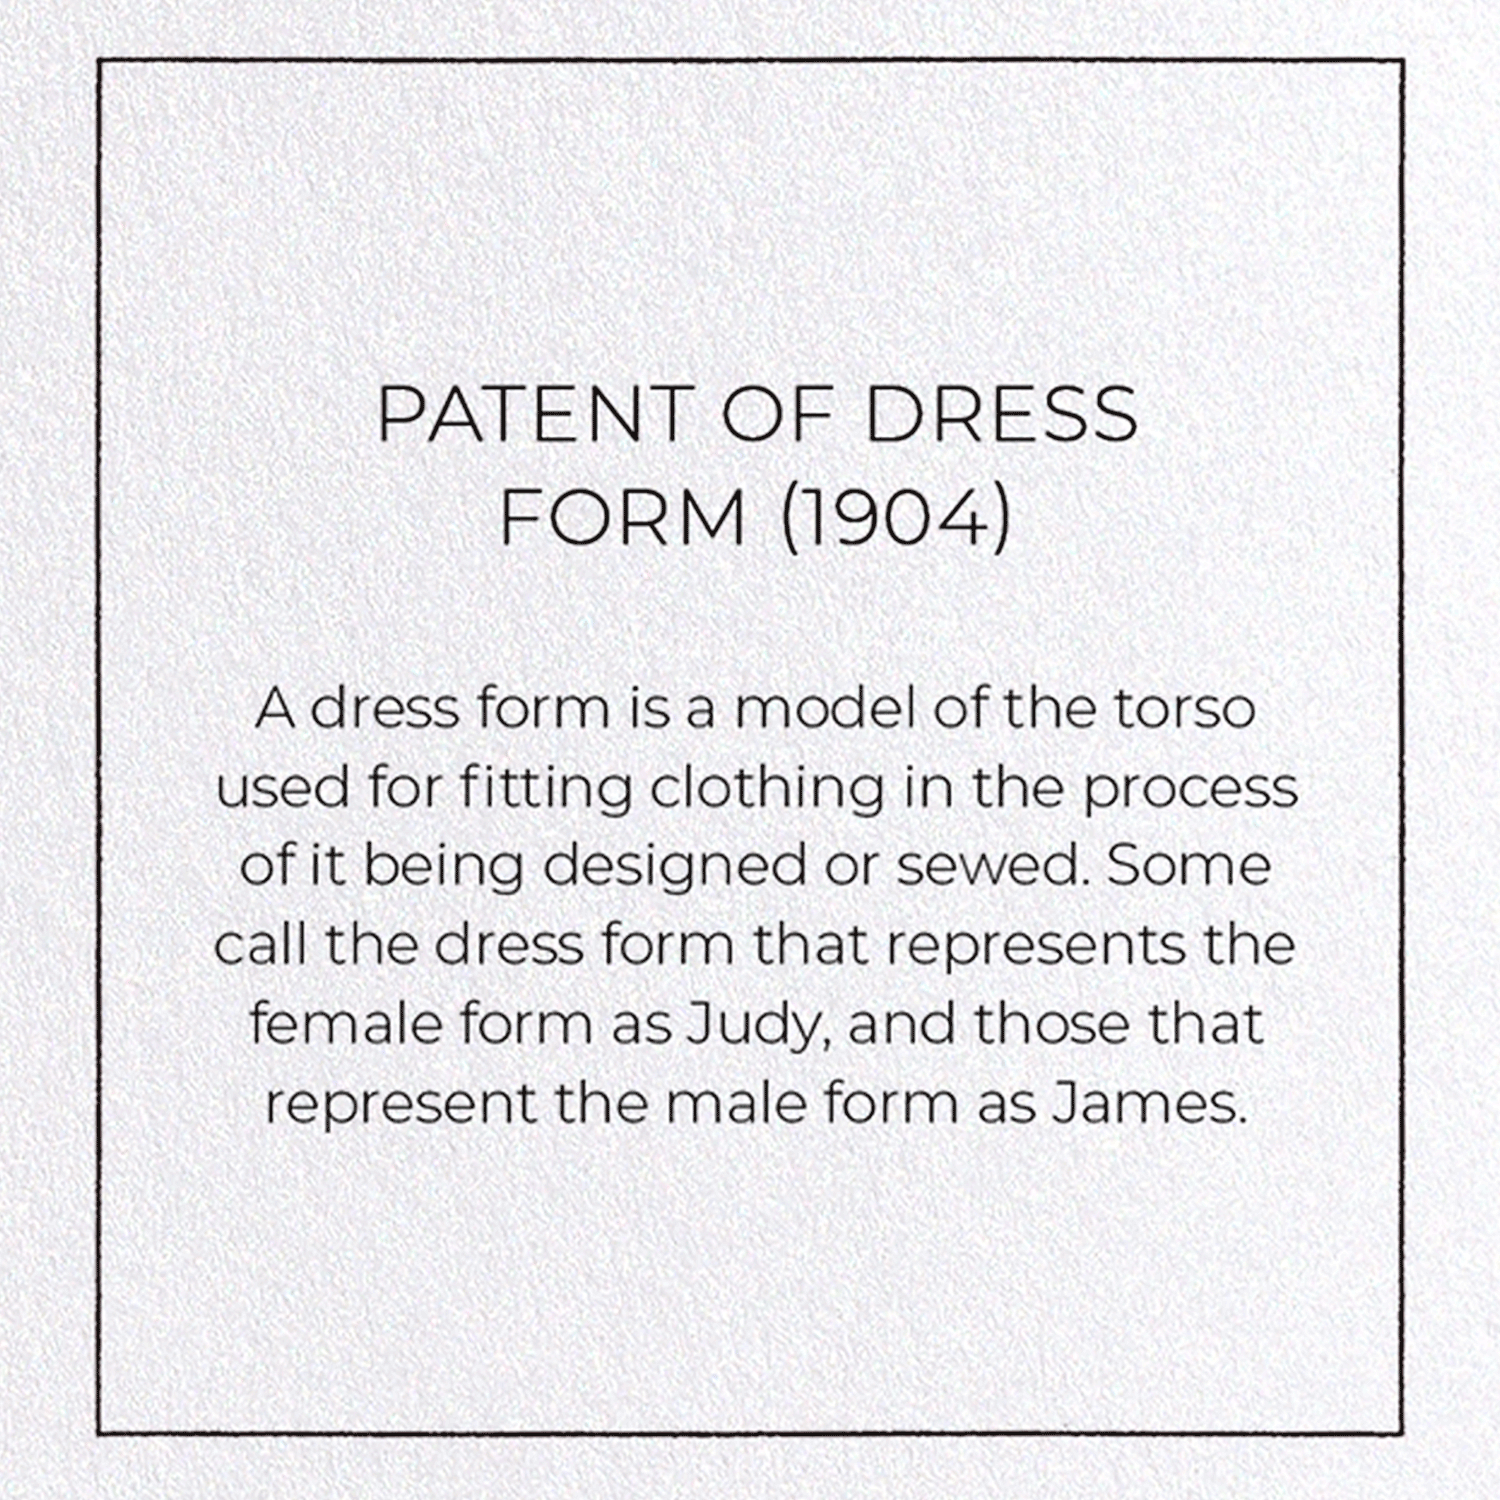 PATENT OF DRESS FORM (1904)